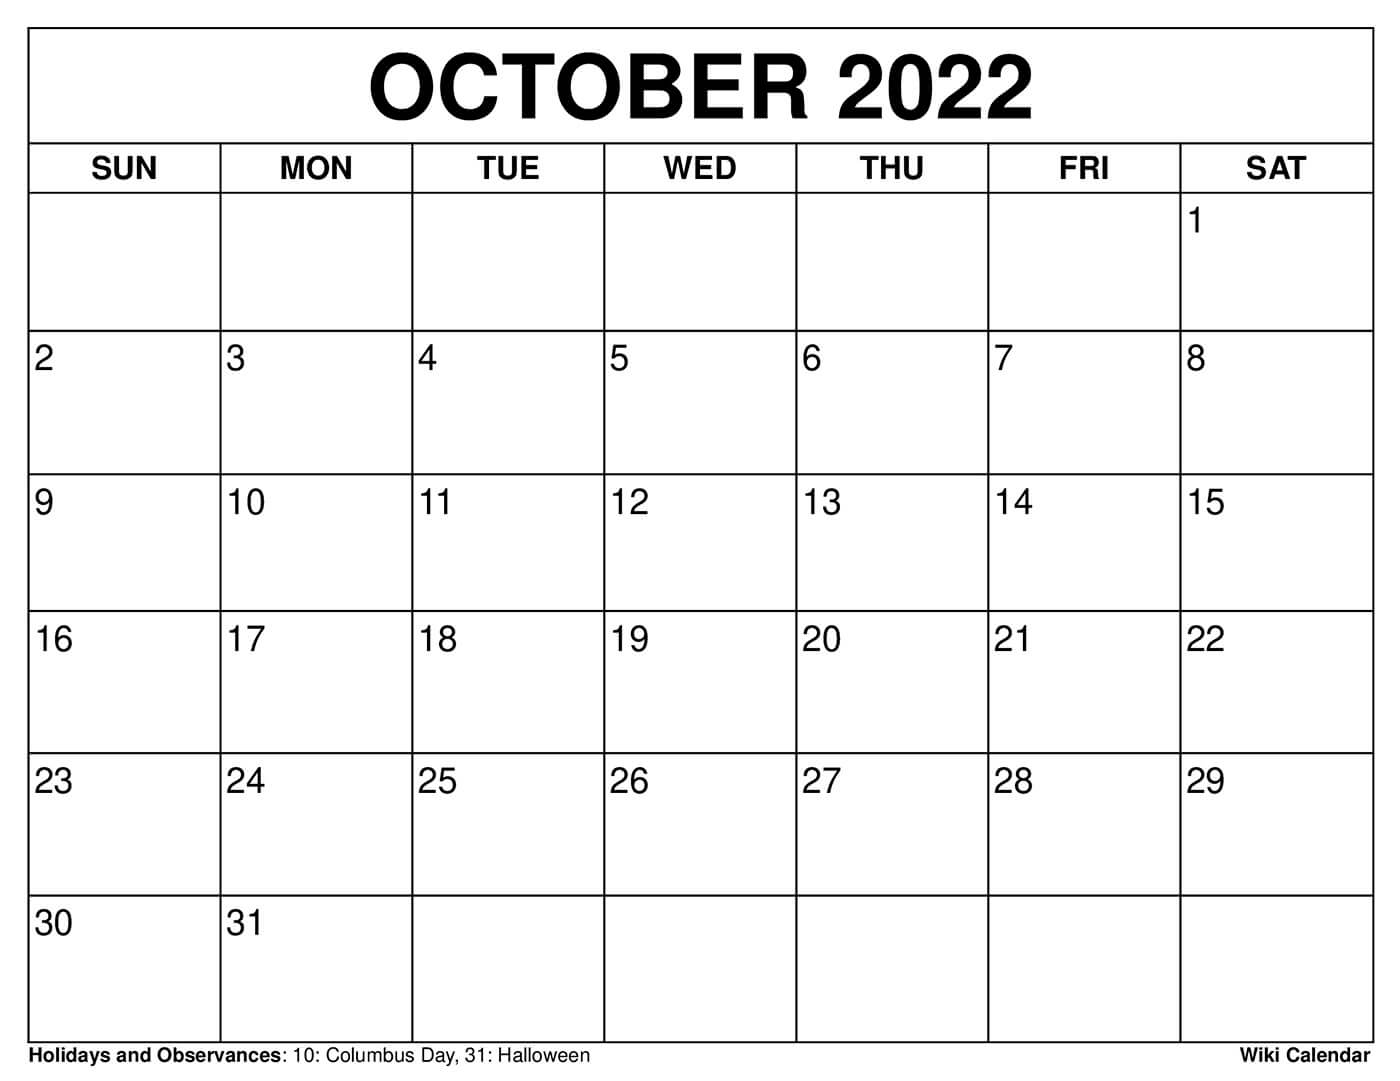 Free Printable Calendar 2022 October Free Printable October 2022 Calendars - Wiki Calendar